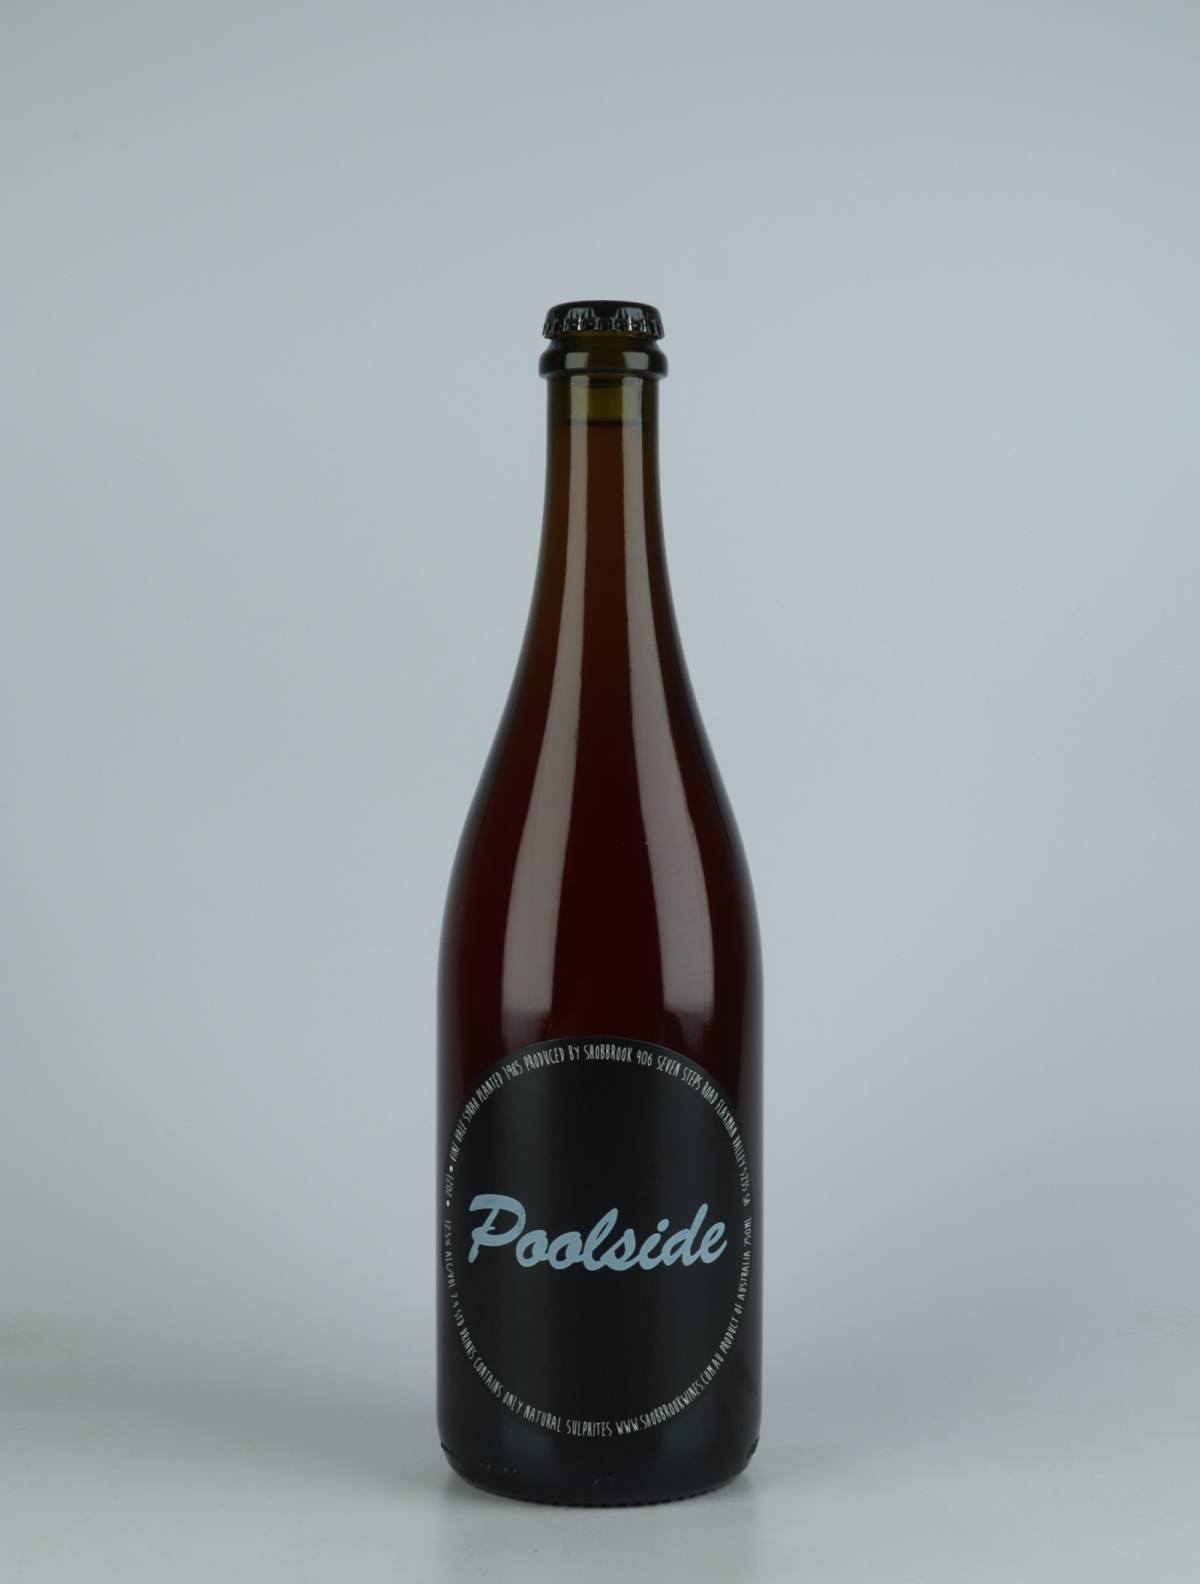 A bottle 2021 Poolside Rosé from Tom Shobbrook, Barossa Valley in 